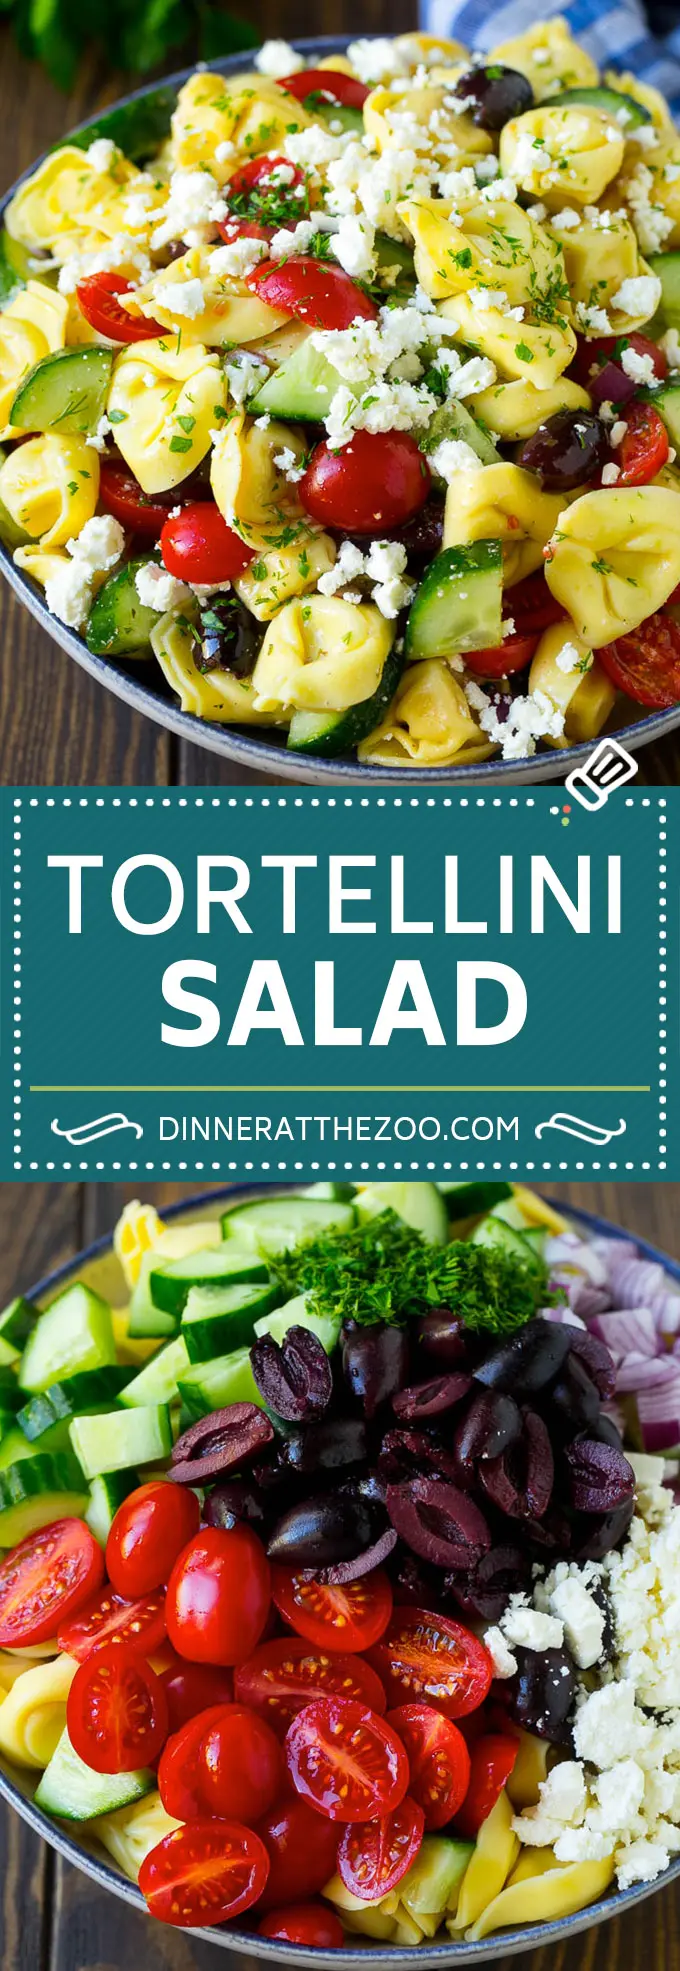 Grieks Tortellini Salade Recept | Pasta Salade | Tortellini Salade | Griekse Salade #grieks #tortellini #pasta #salade #komkommers #olijven #diner #dinneratthezoo